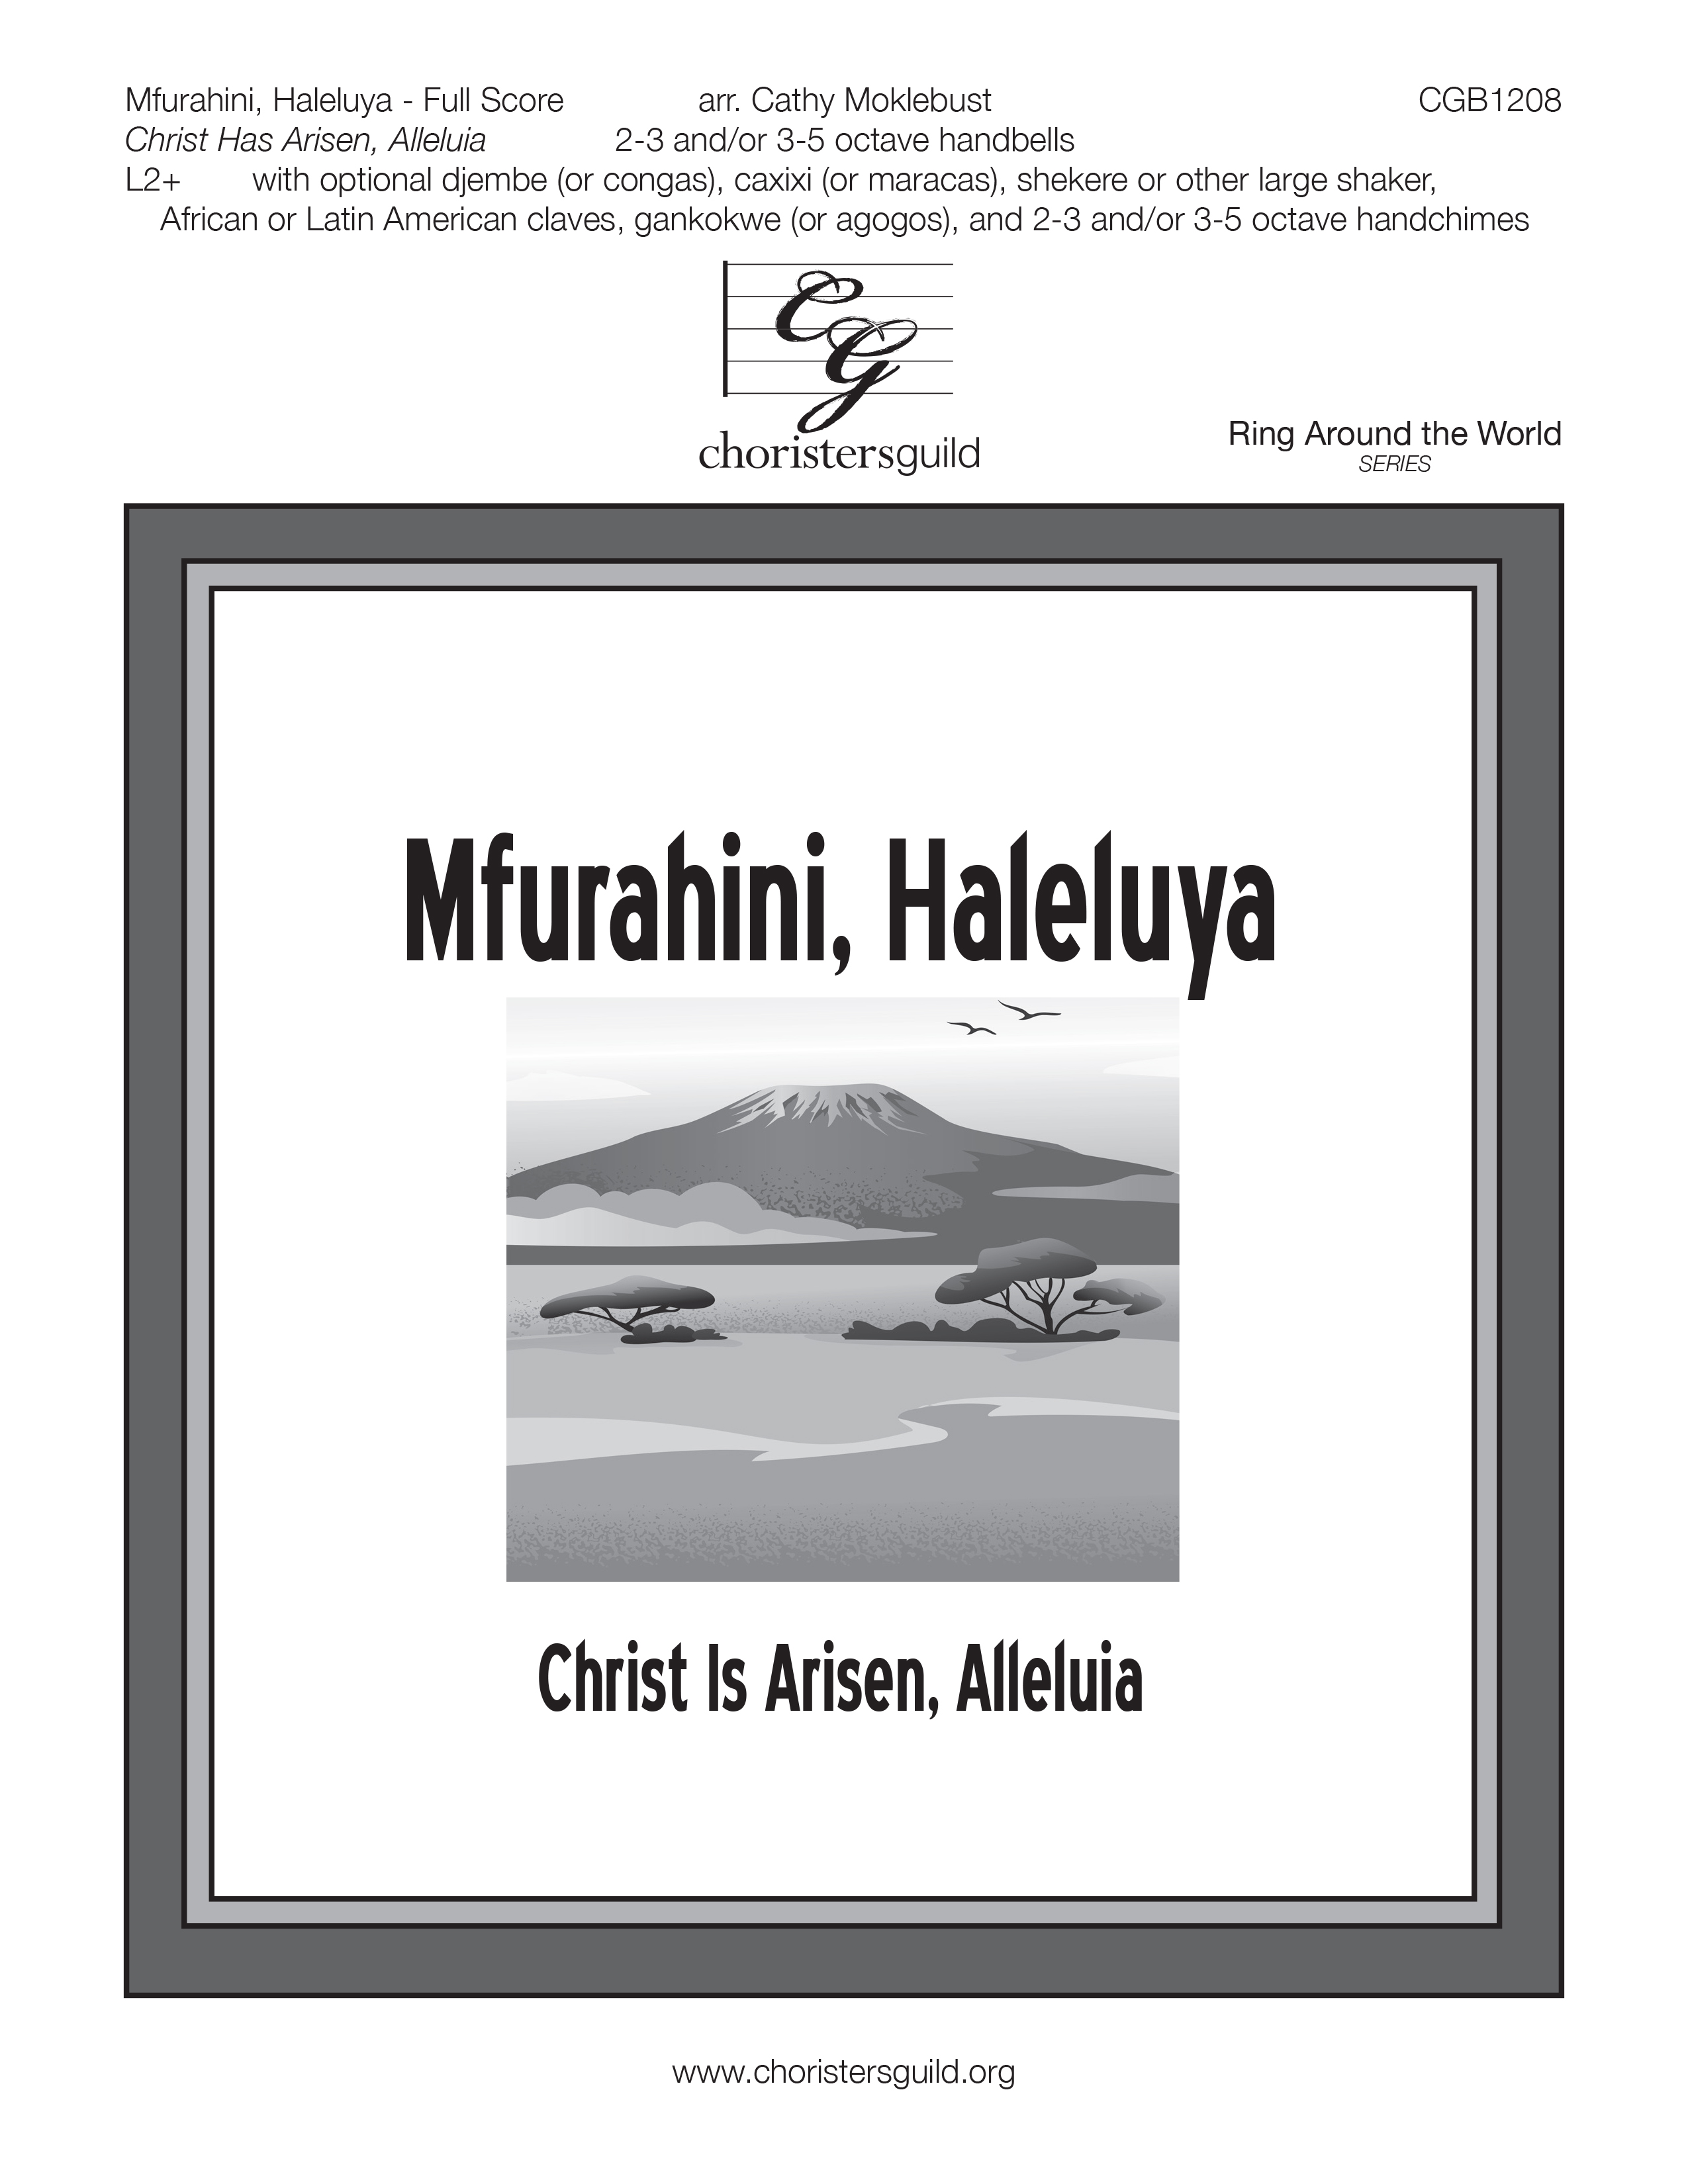 Mfurahini Haleluya (Christ is Risen, Alleluia) - Full Score